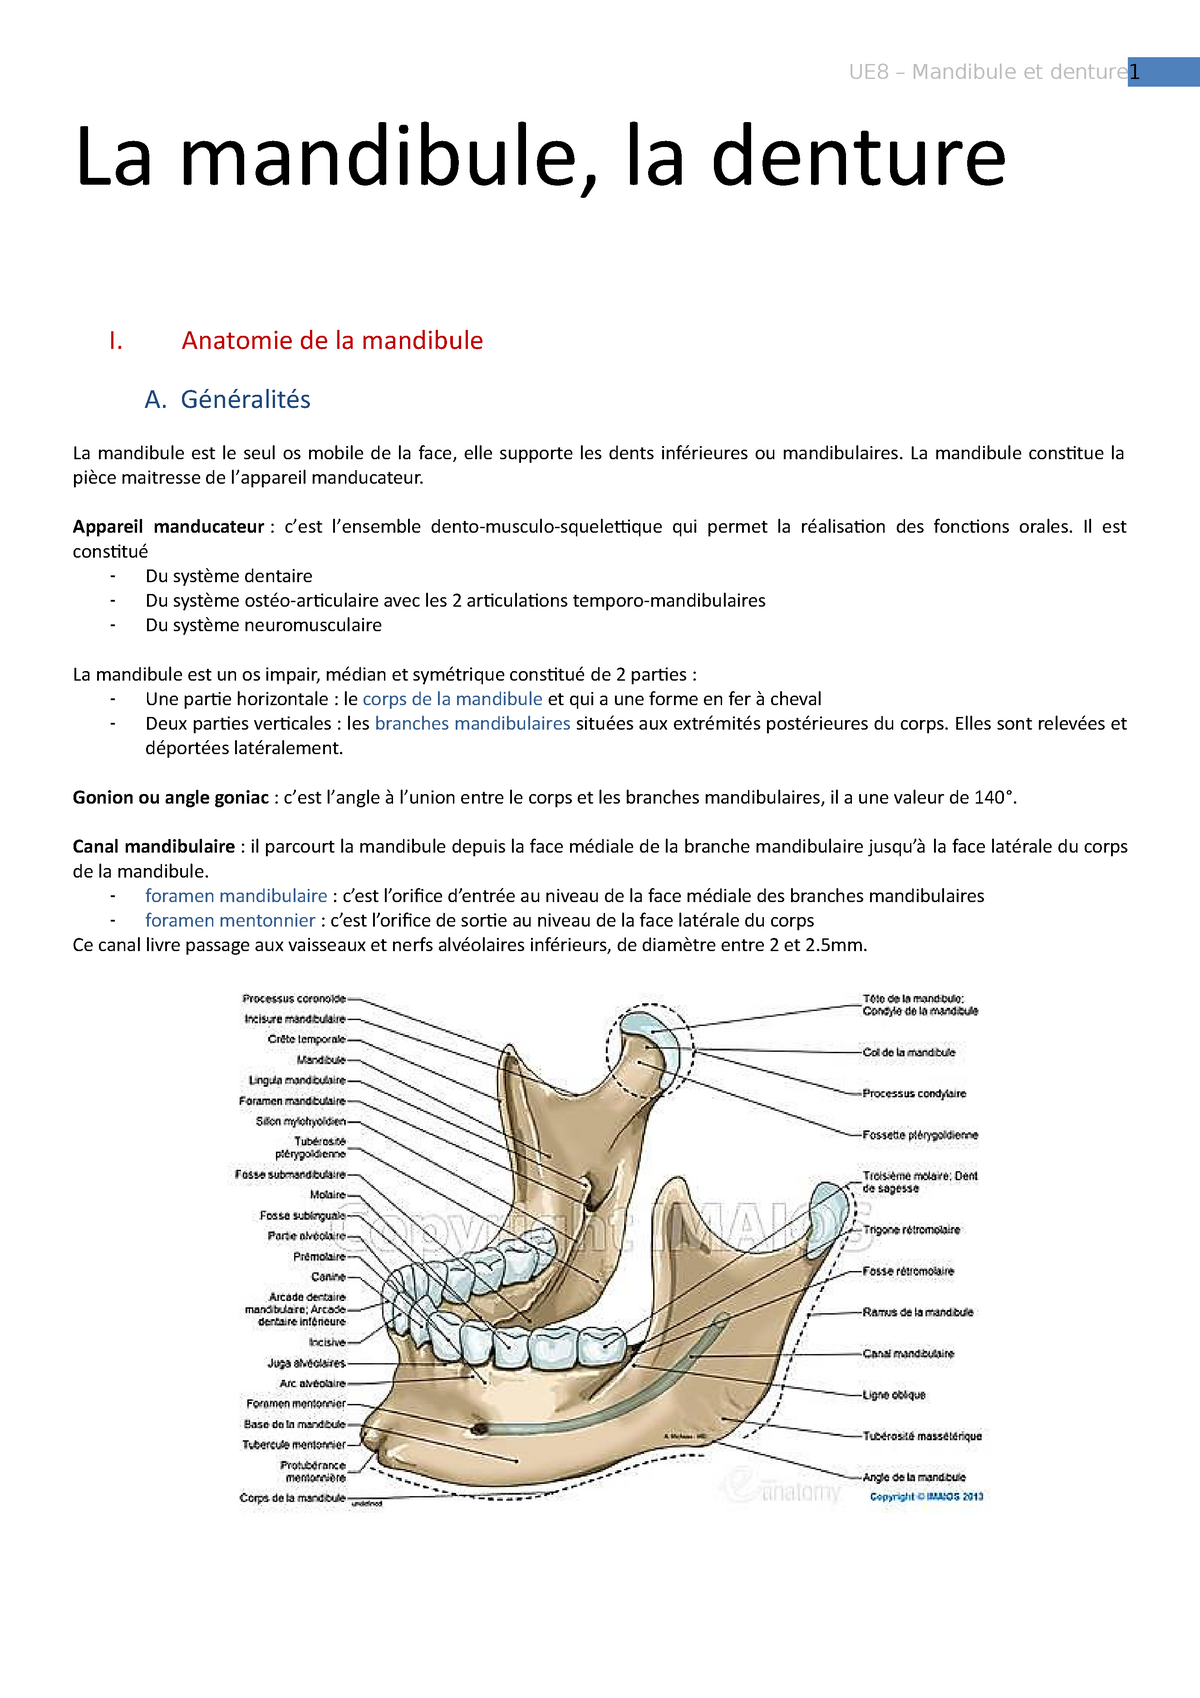 Mandibule Et Denture Professeur Morandi La Mandibule La Denture I Anatomie De La Mandibule 4549